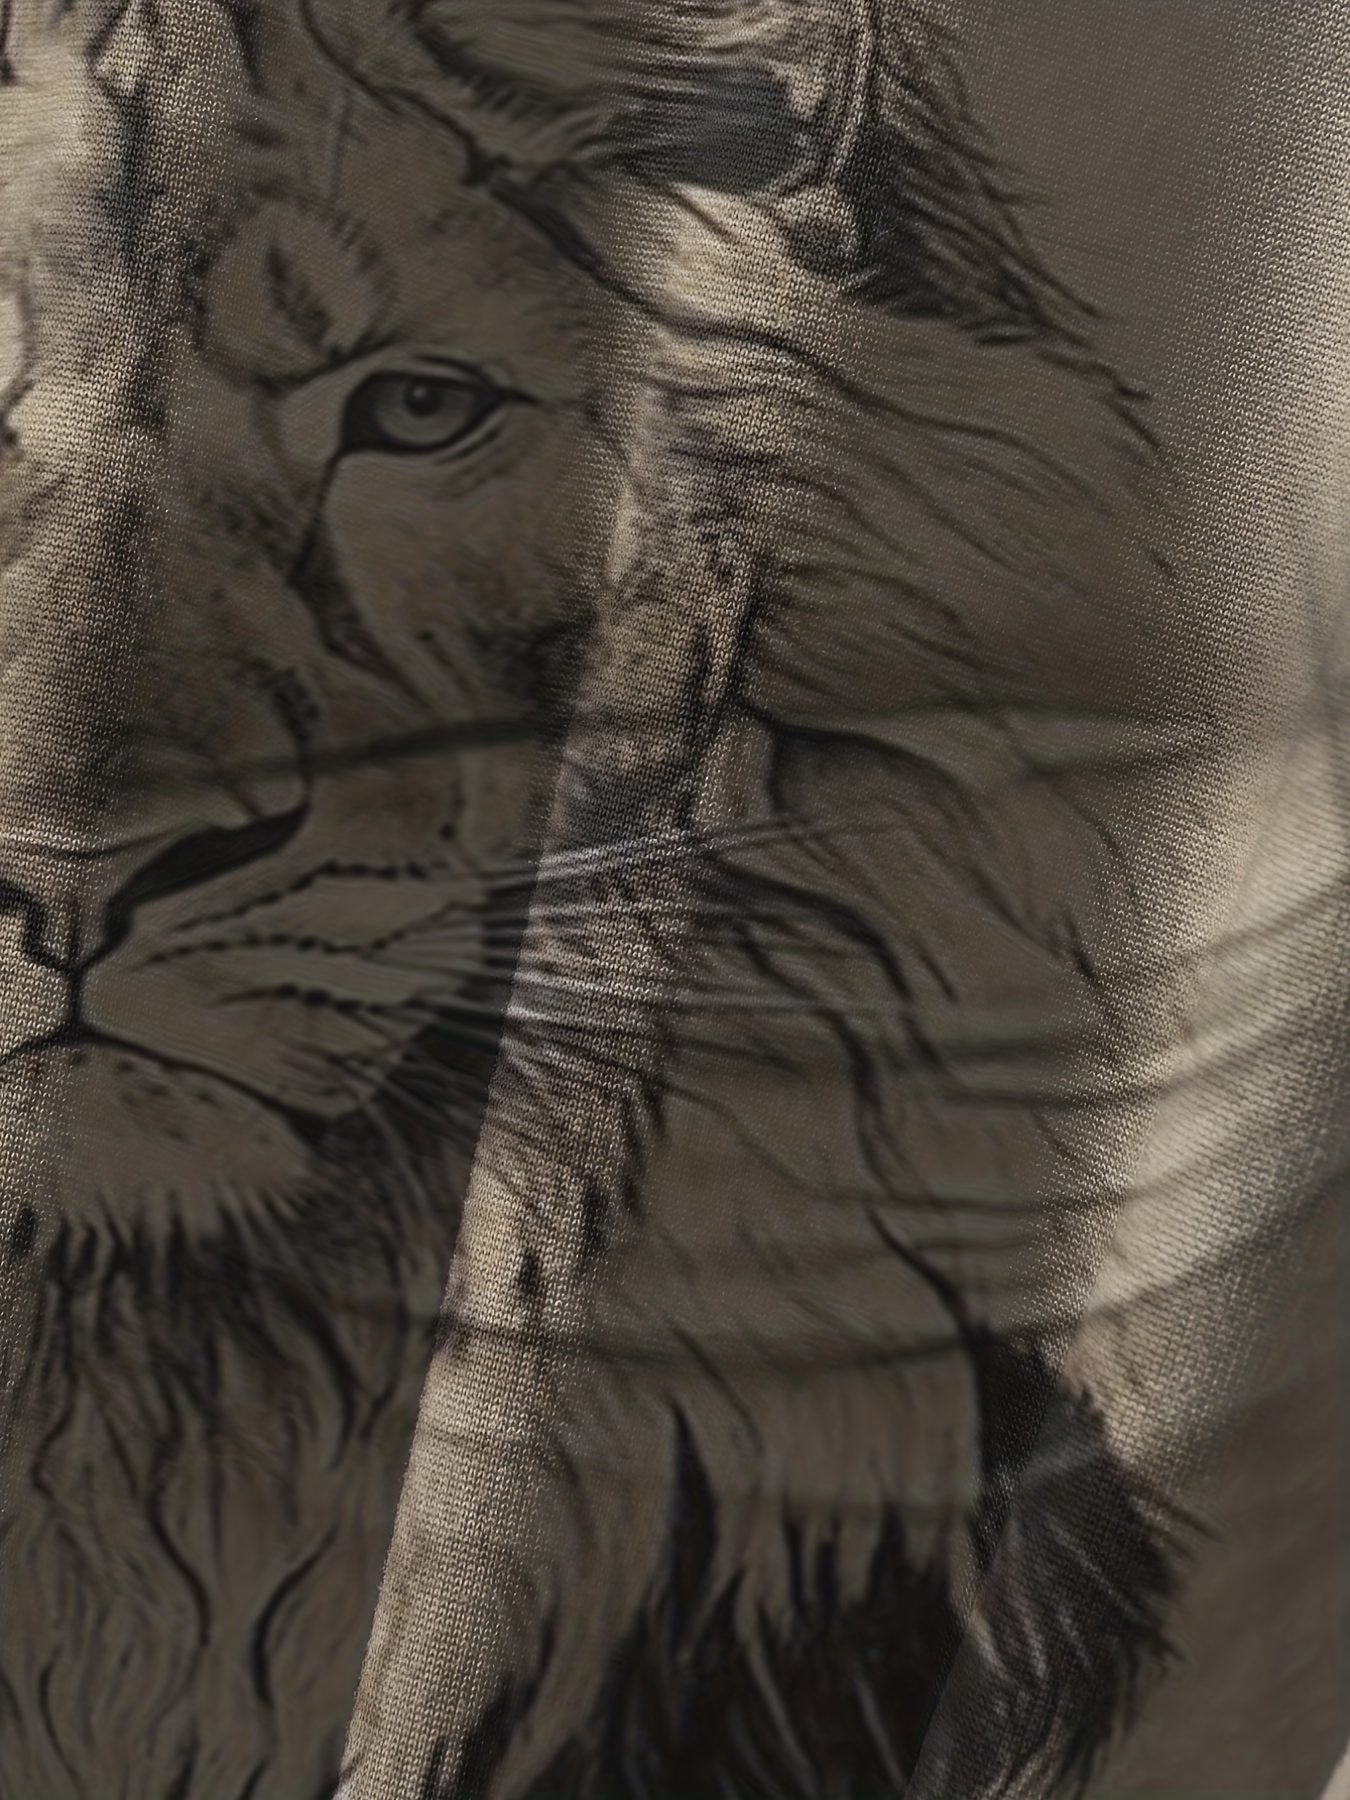 MEOILCE Men T-Shirts 3D Print Lion Pattern Long Sleeve Tshirts Shirts for  Men Casual Fashion Cool Graphic Design Tee Shirt : : Clothing